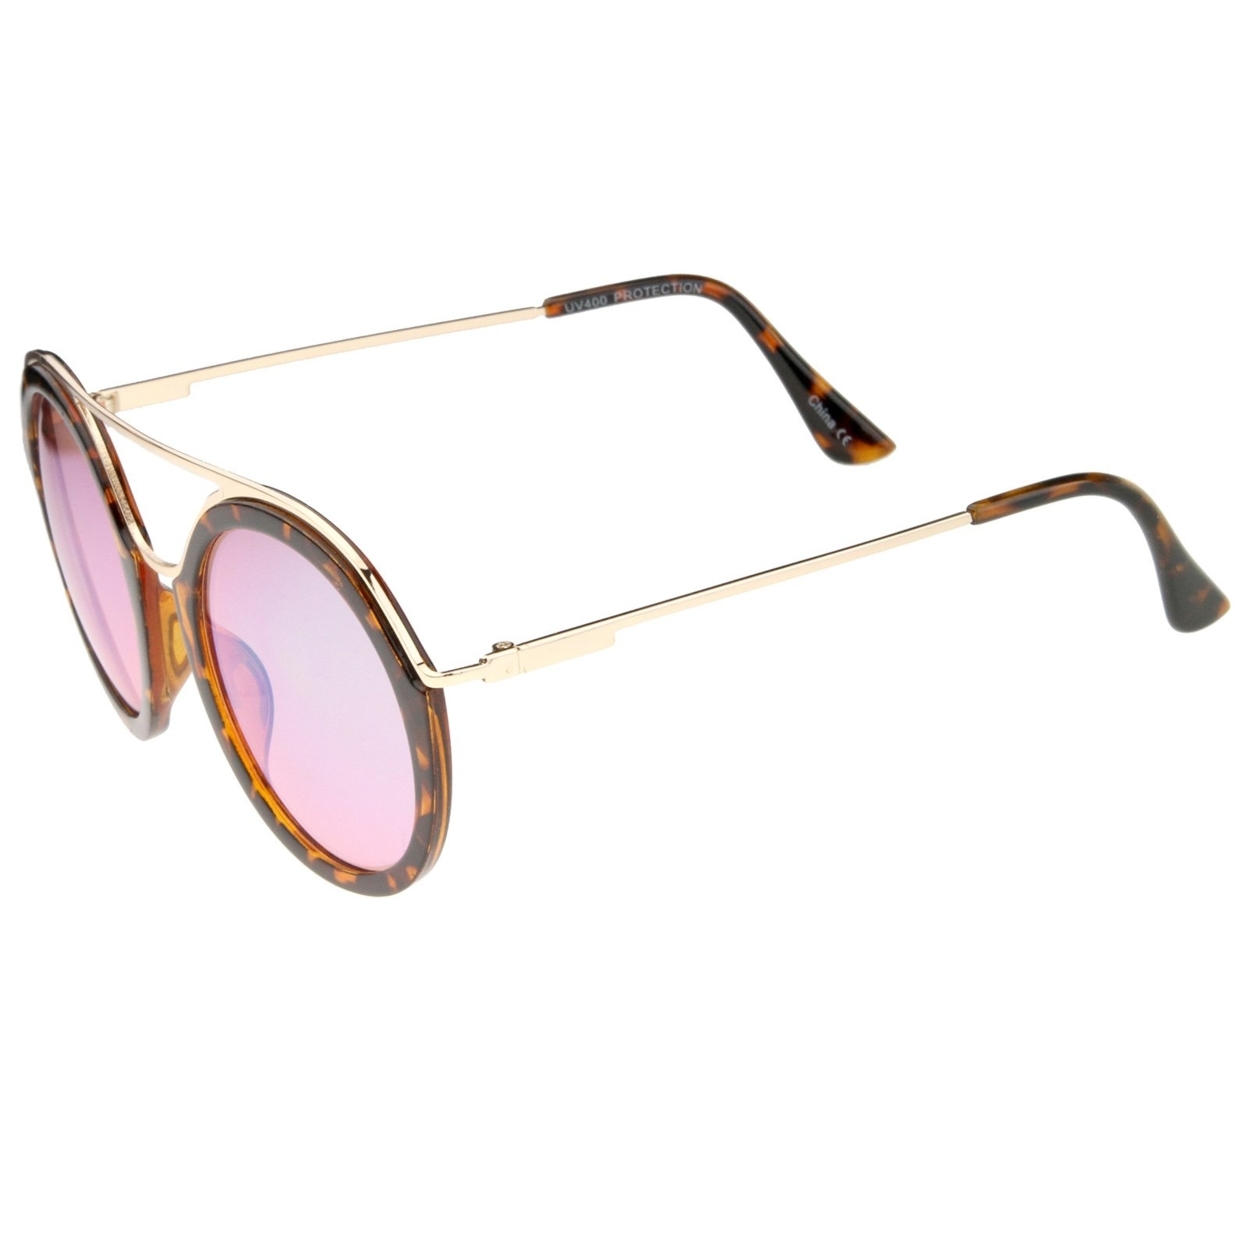 Modern Metal Double Nose Bridge Colored Mirror Lens Round Sunglasses 52mm - Creme-Gold / Smoke Mirror